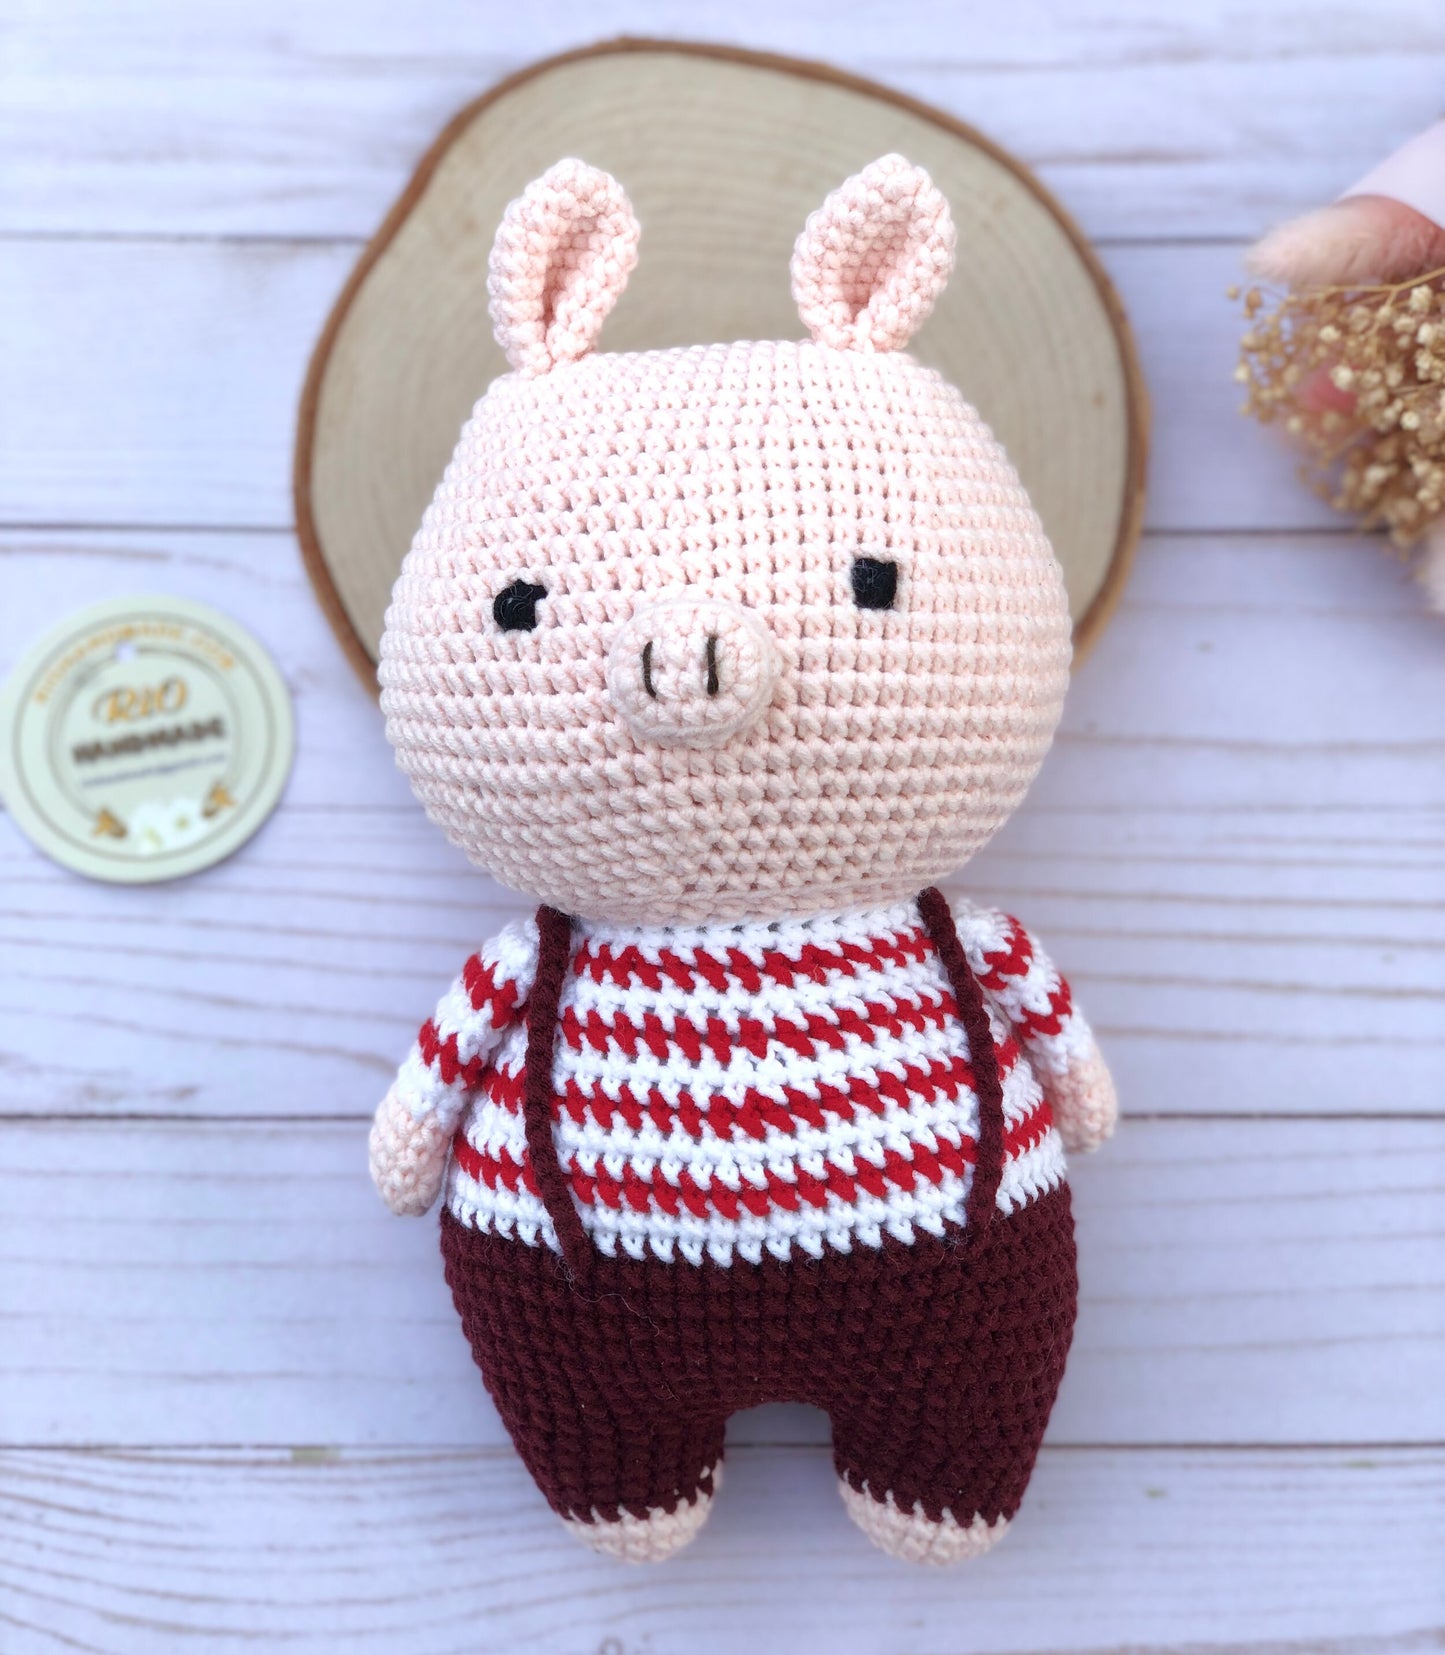 Handmade wool cotton animals crochet, amigurumi, cute, soft toy for baby, toddler, kid, adult hobby